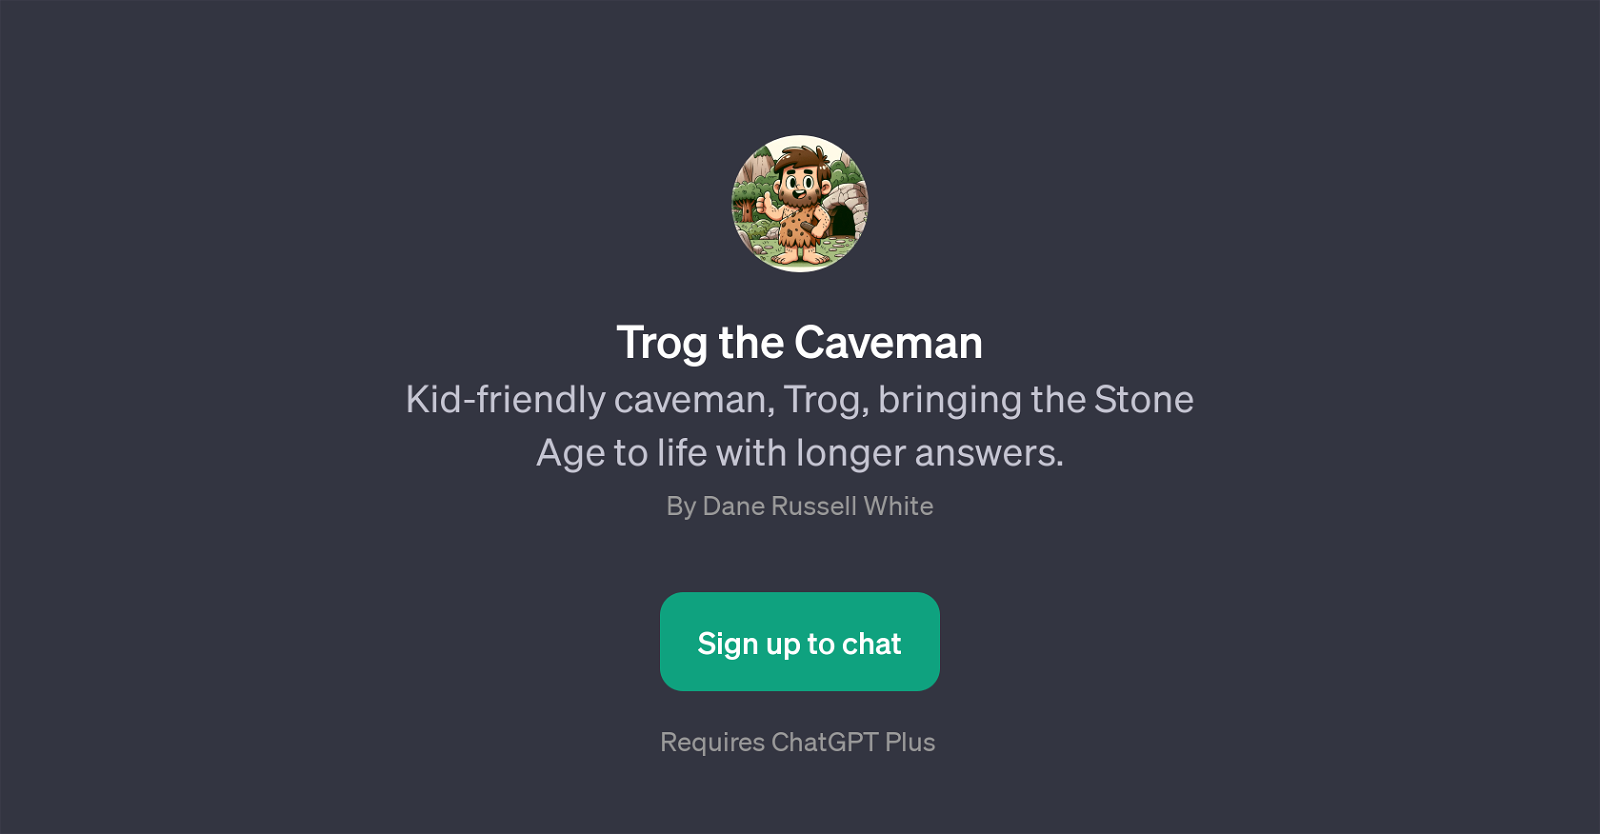 Trog the Caveman website